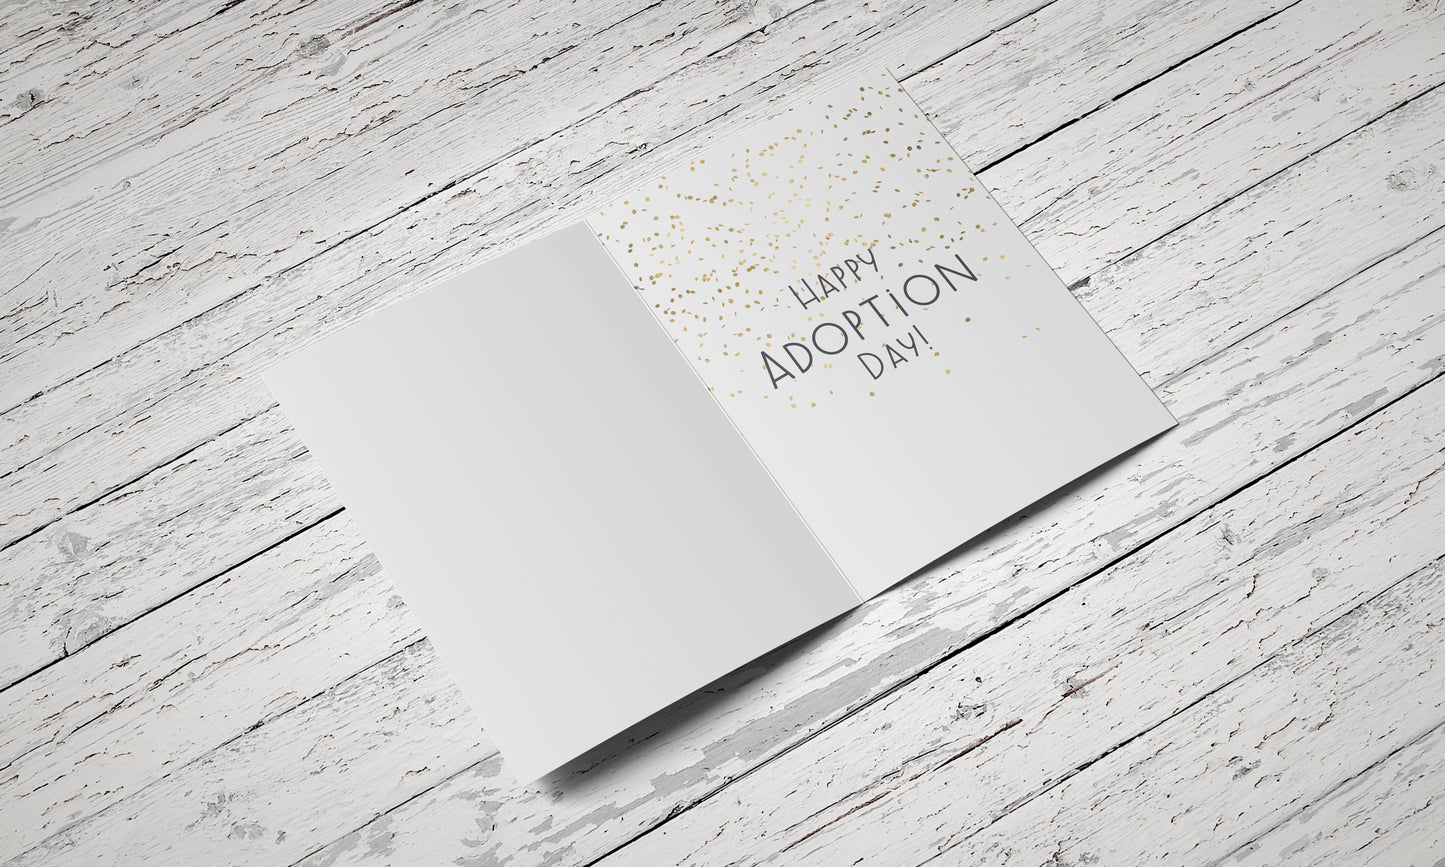 Adoption Card - Single Card